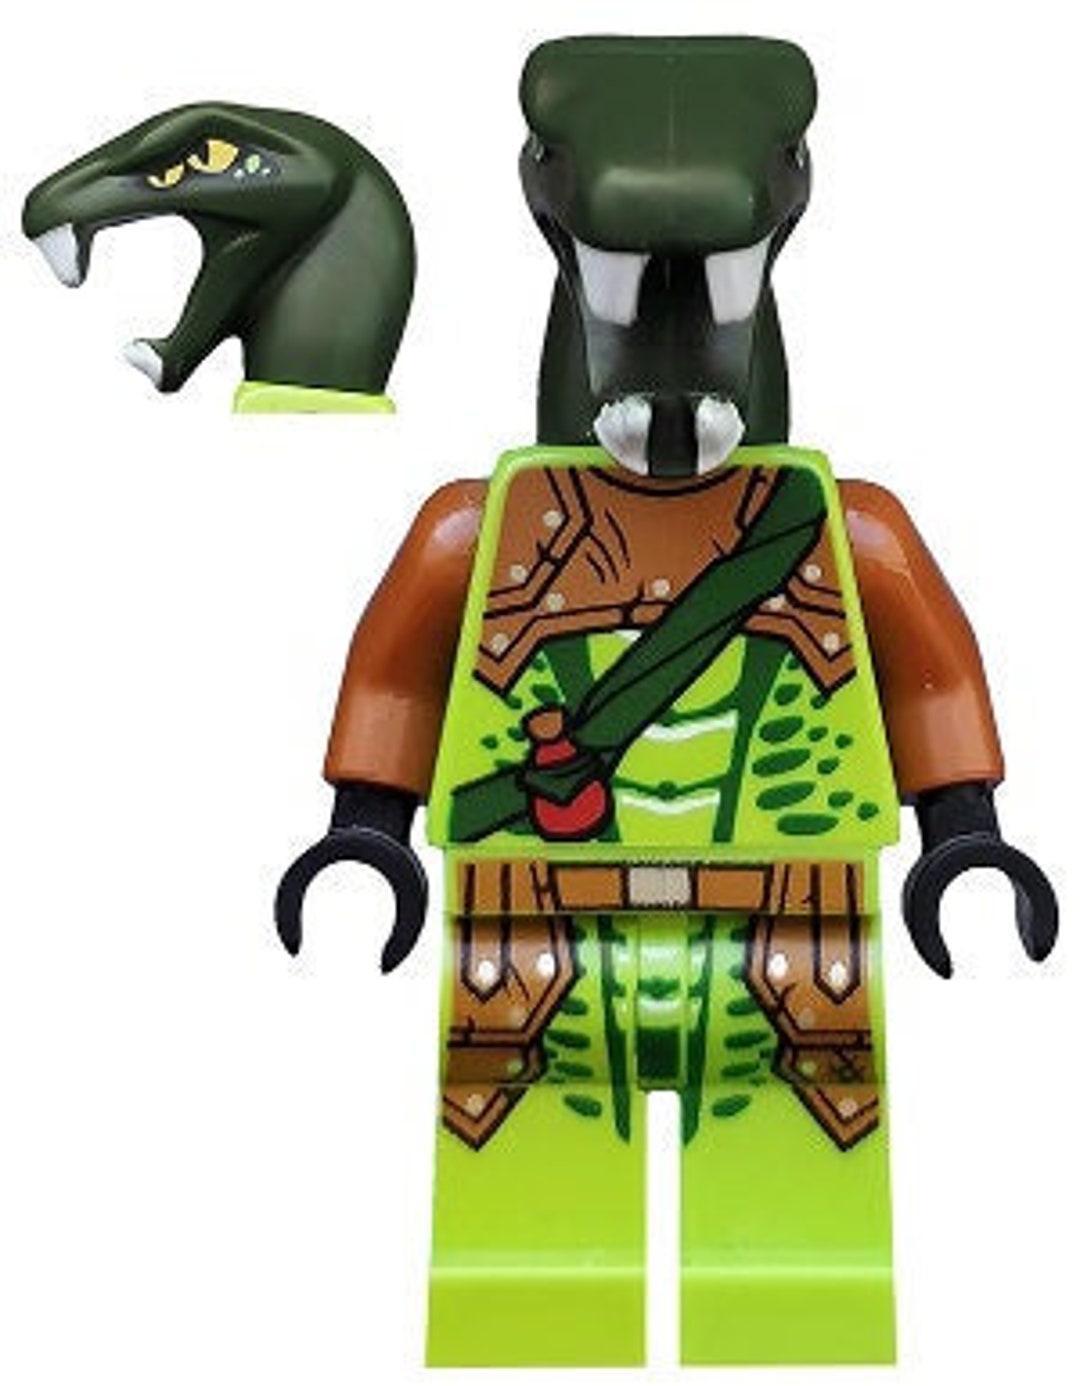 Lego MINIFIGURE Ninjago Zoltar Serpentine Snake Warrior - Etsy